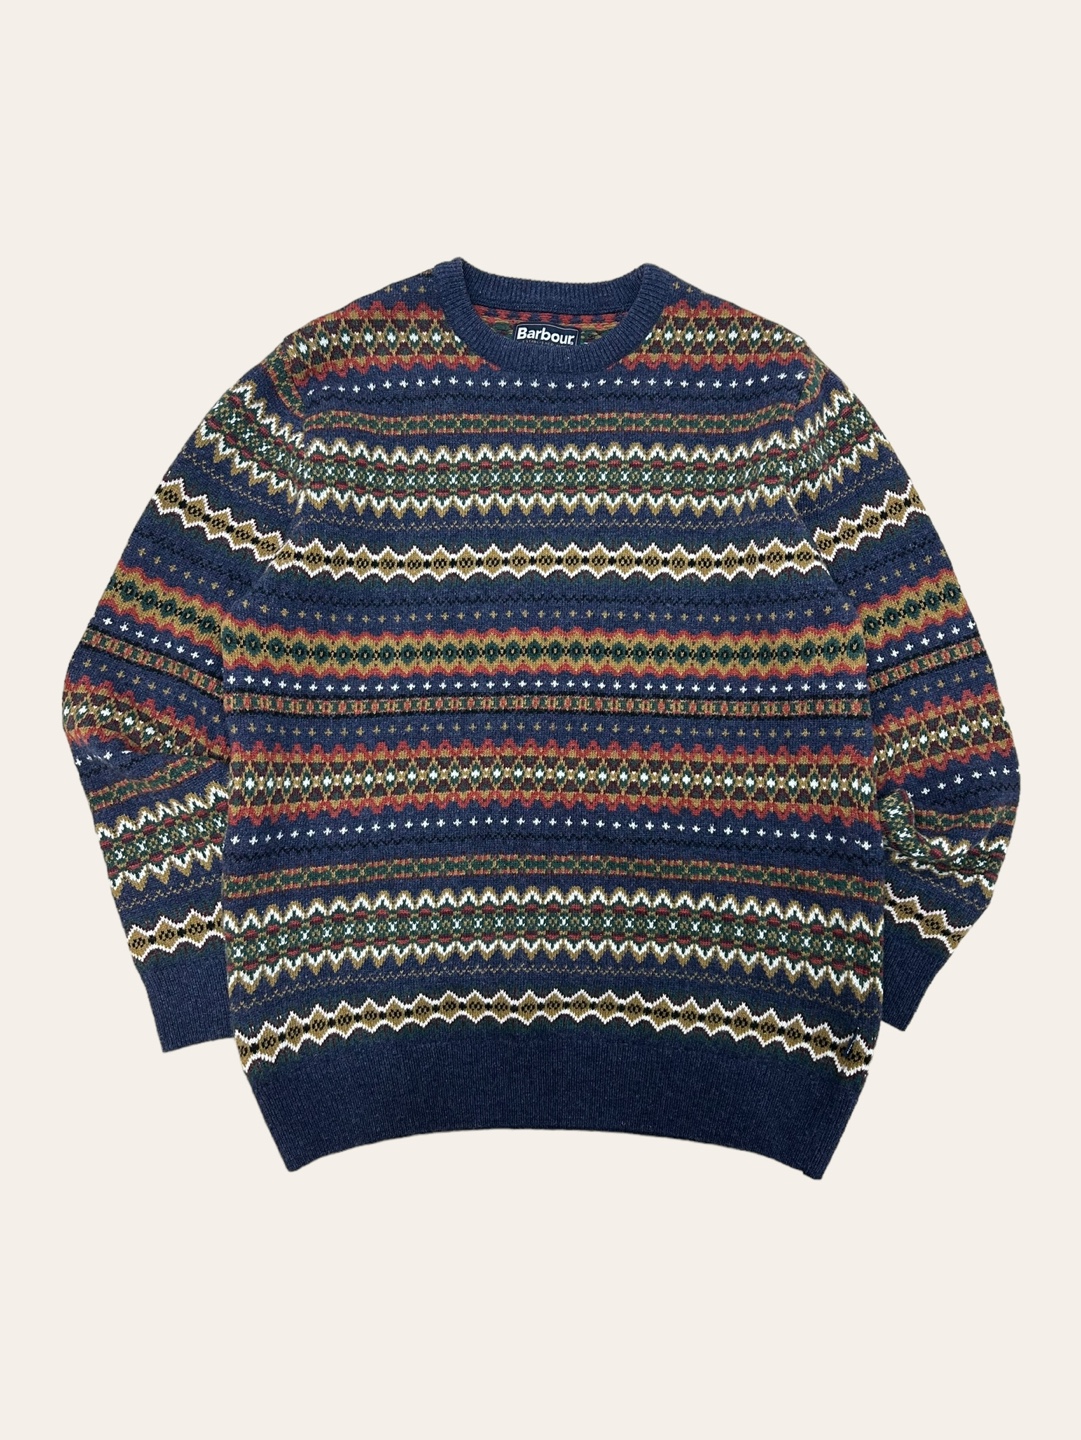 Barbour wool fair isle sweater L